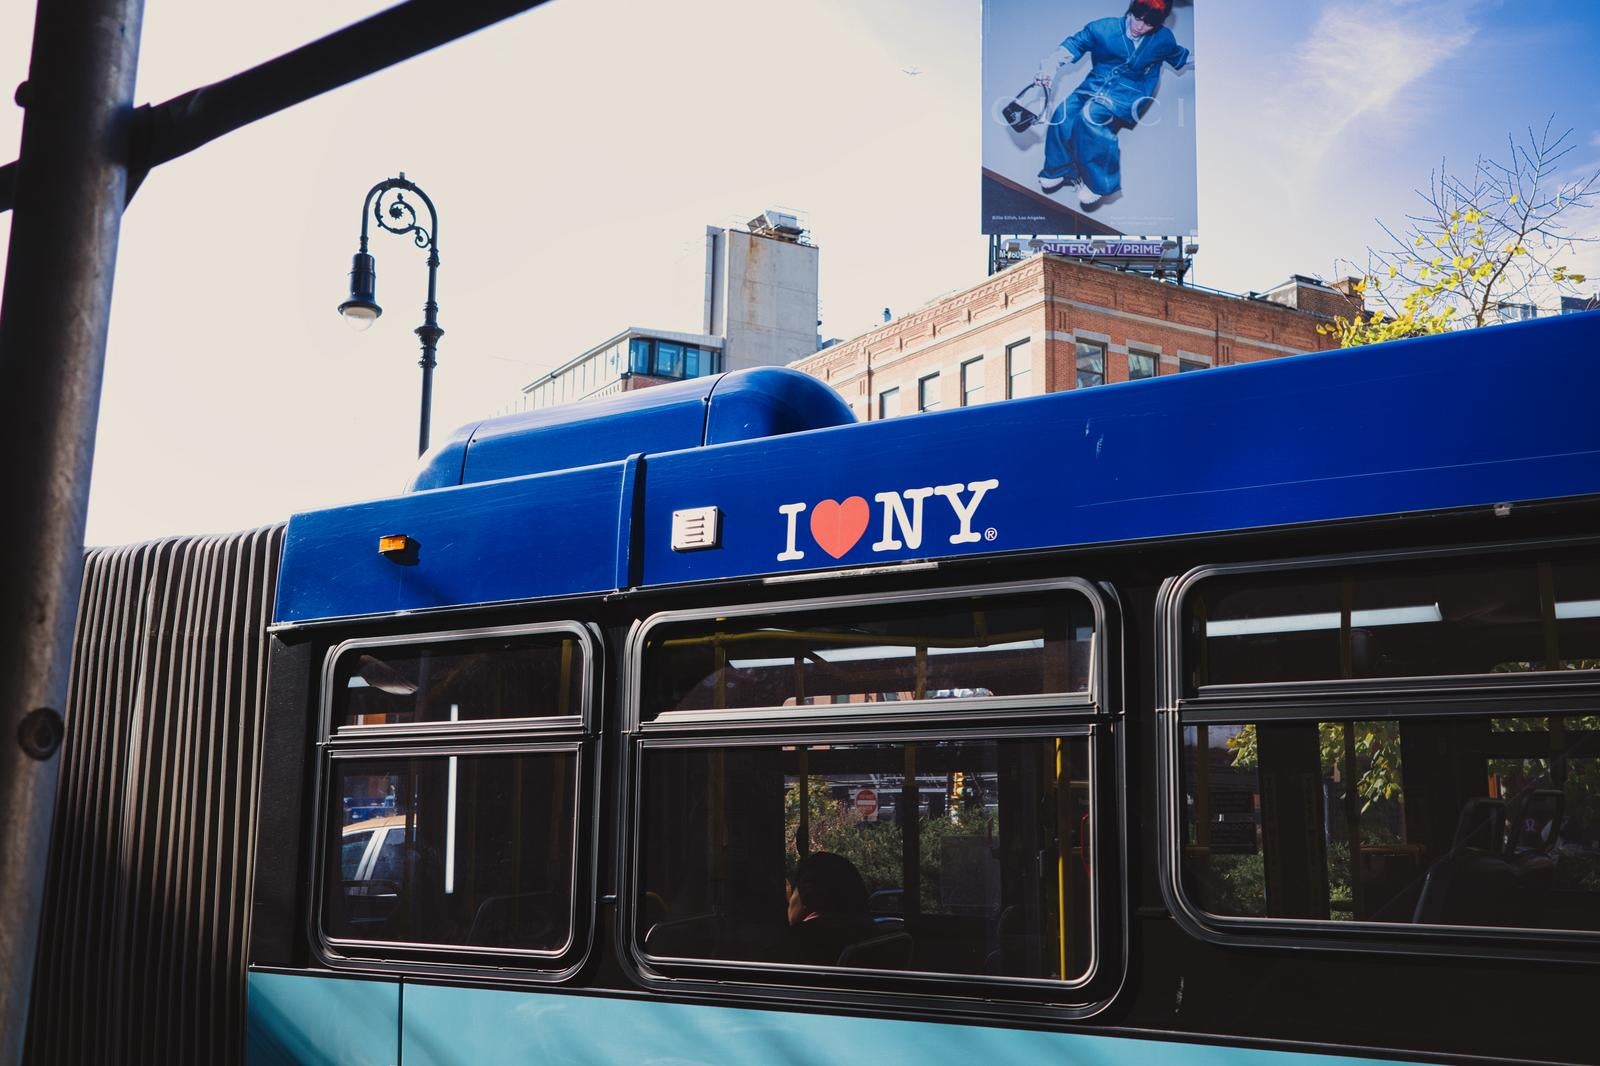 「「I LOVE NY」のメッセージを運ぶニューヨークのバス車両」の写真